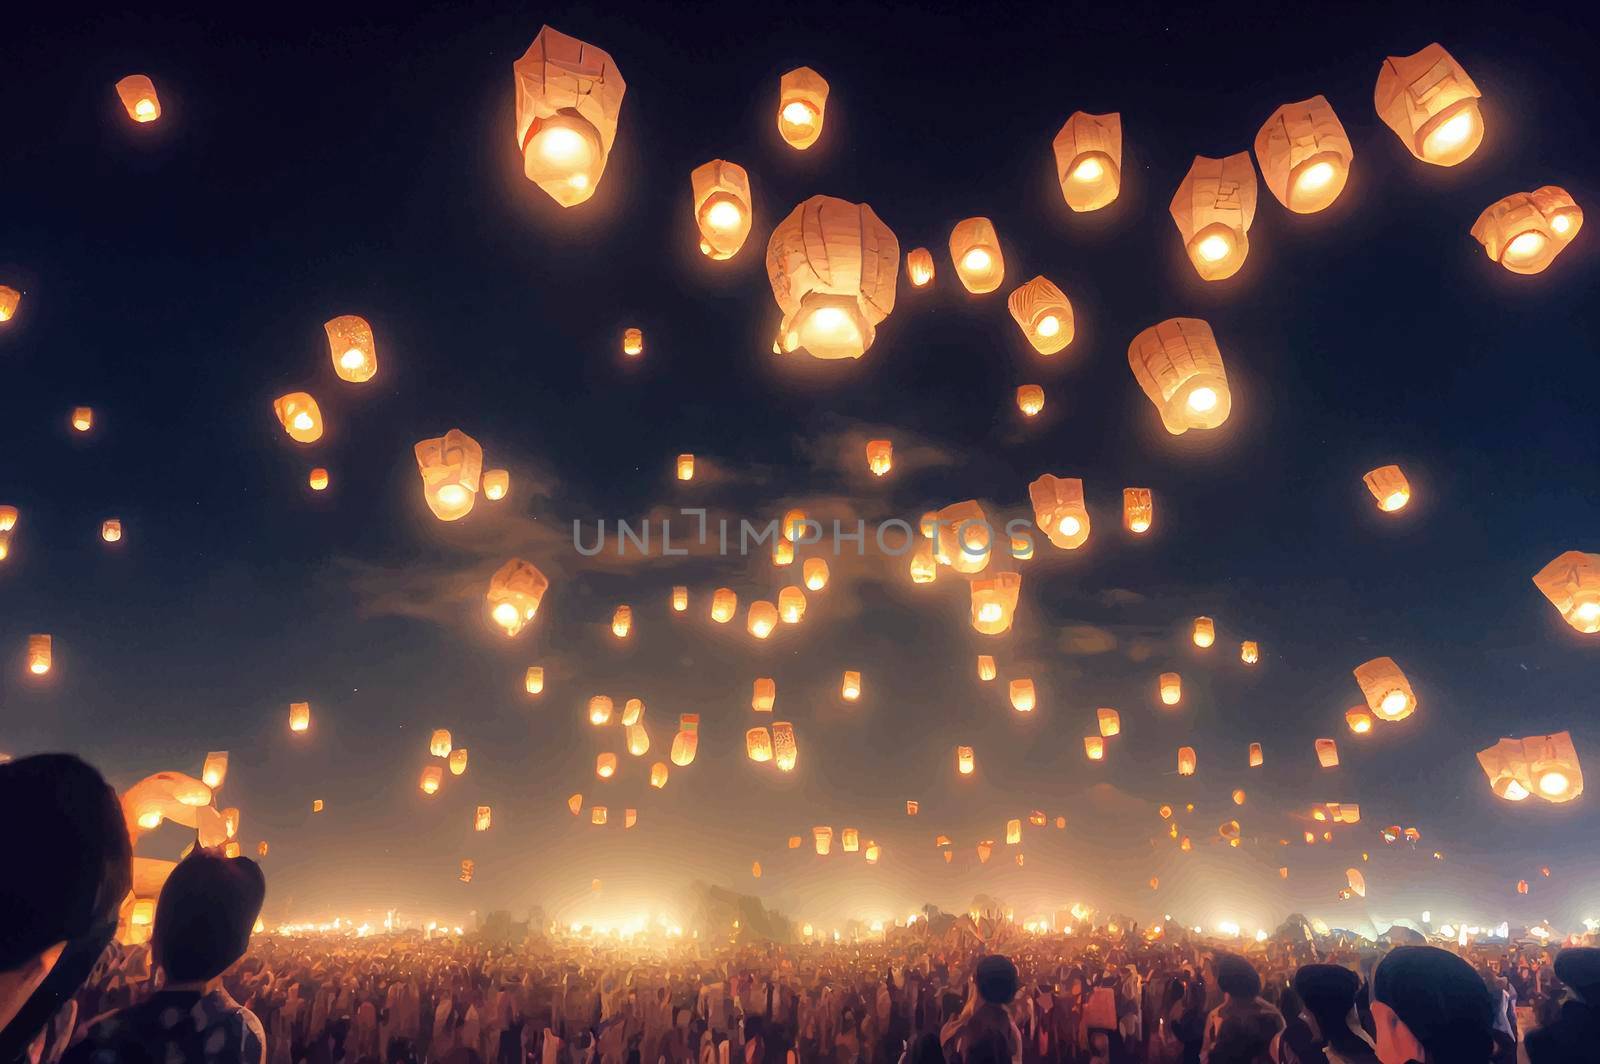 CHIANG MAI LANTERN FESTIVAL, flashlights in the air. cantoya balloons. by JpRamos